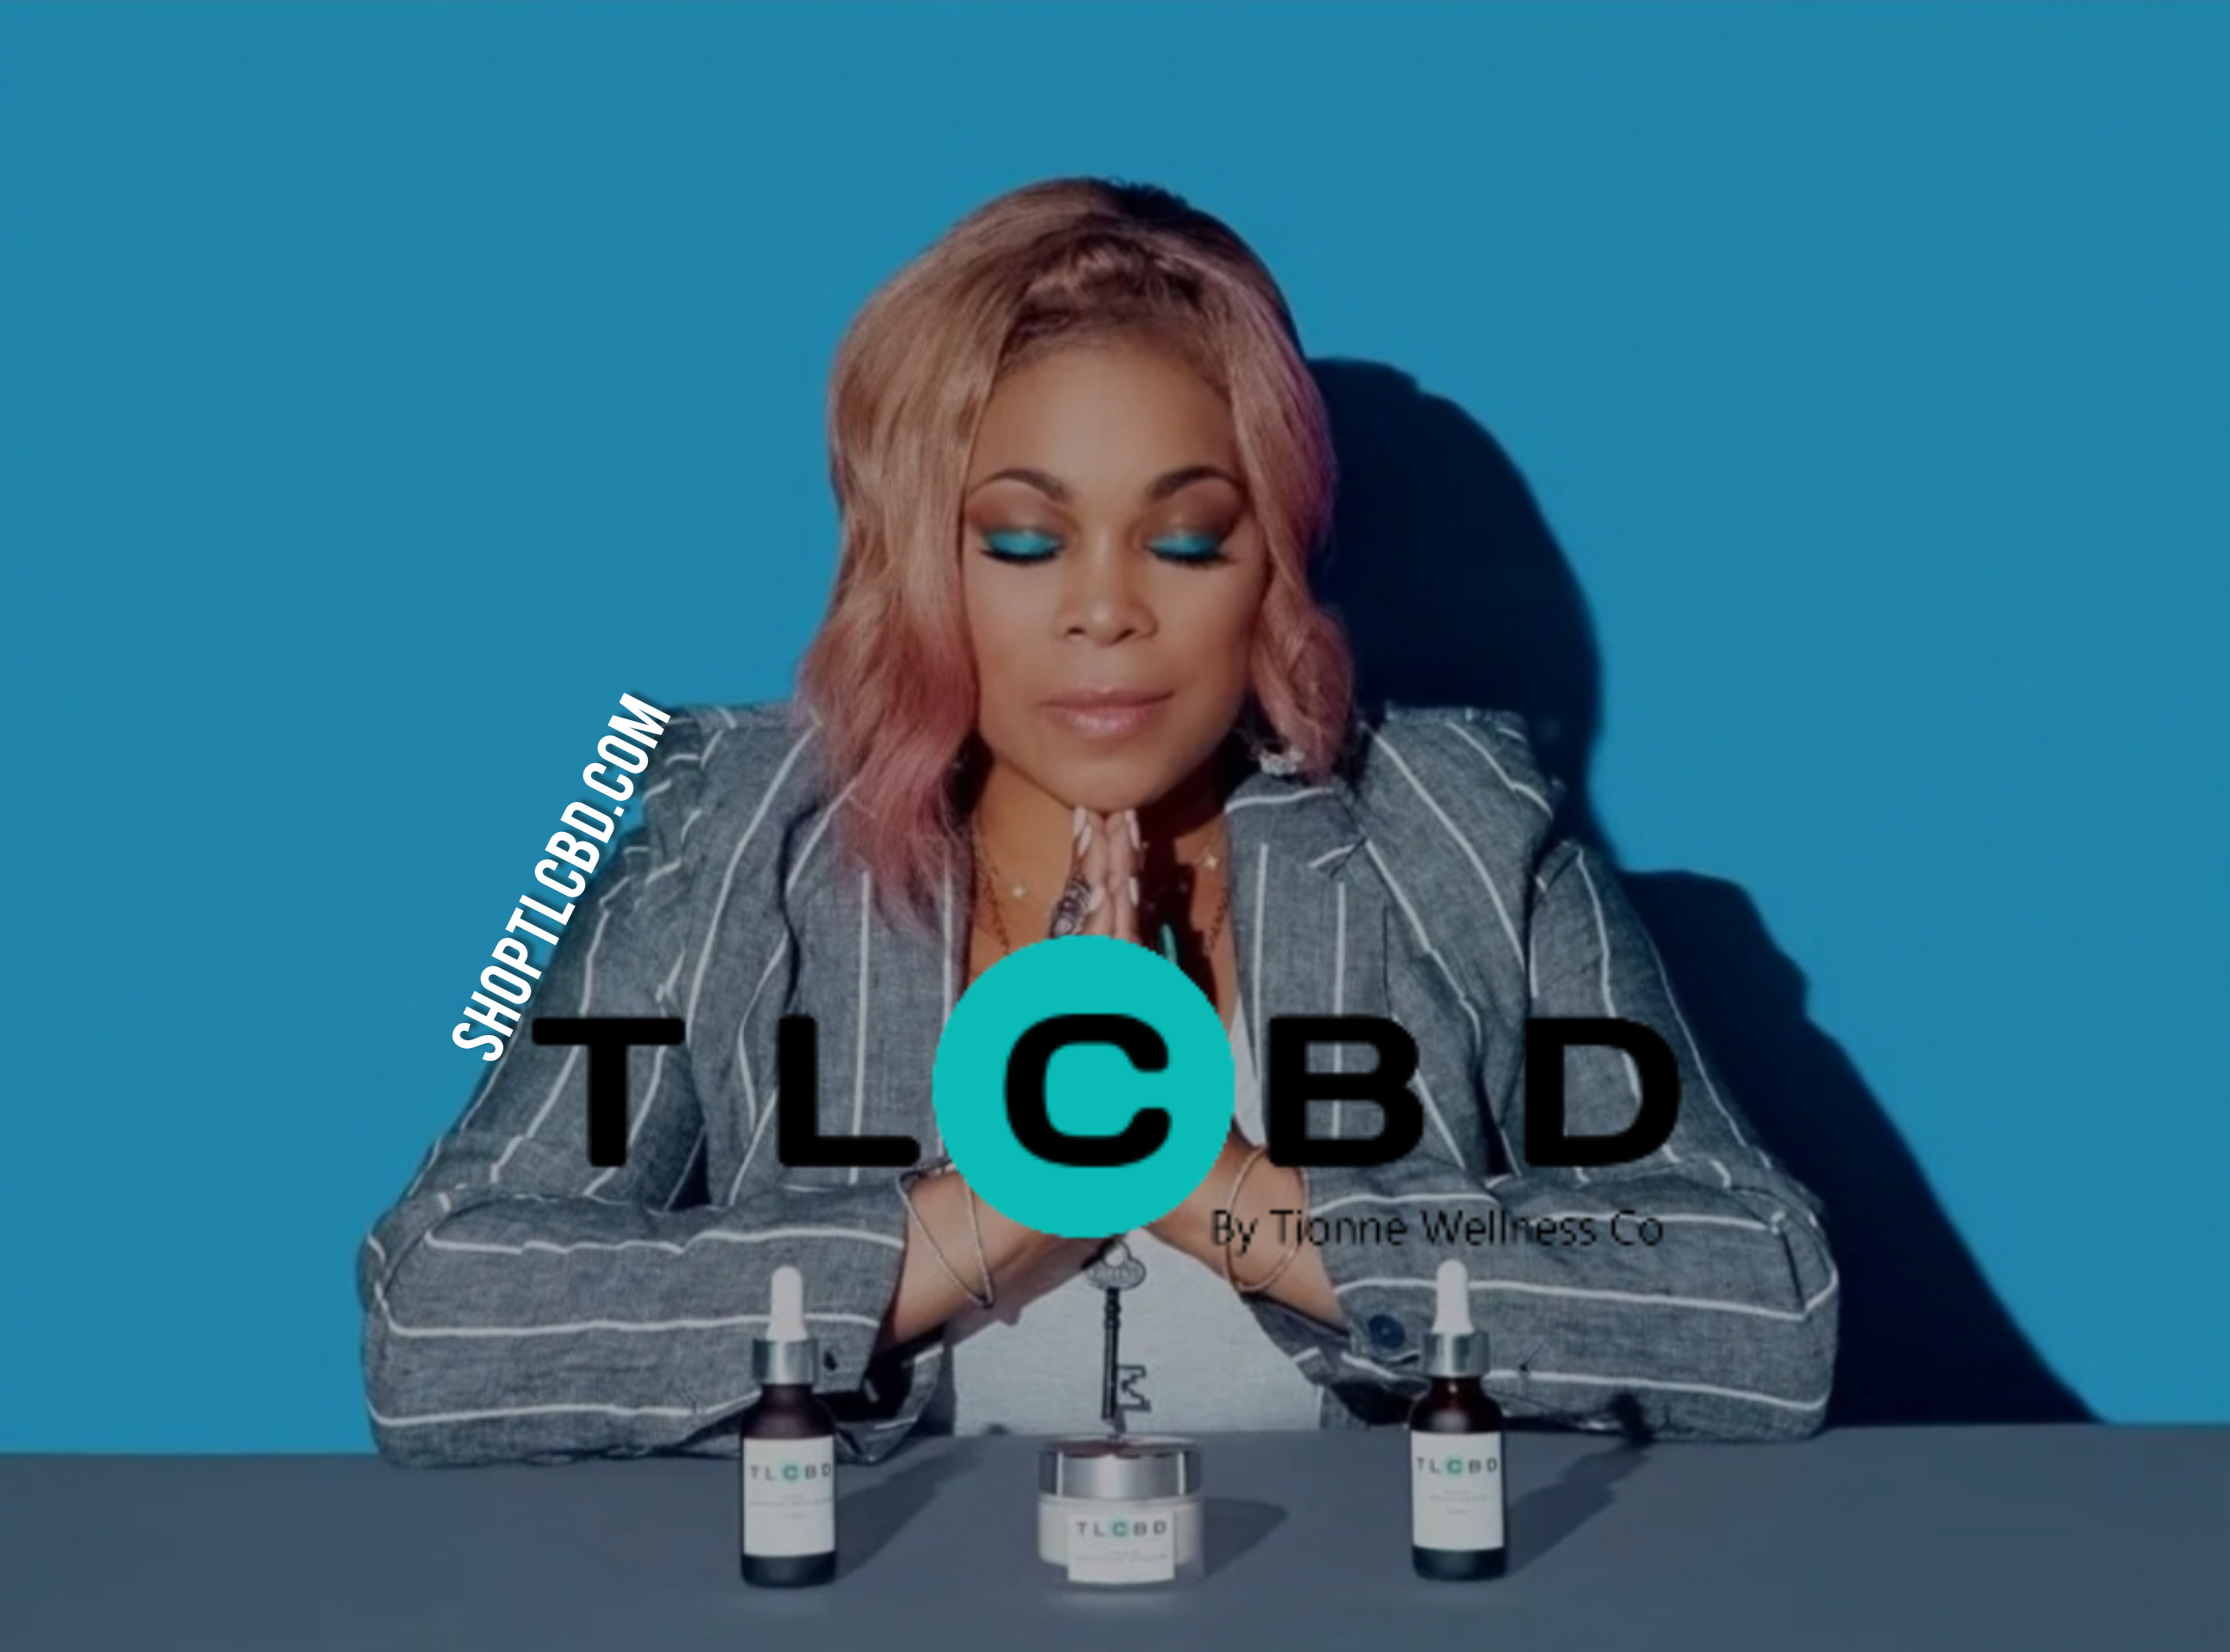 T-Boz Reveals Title Of Her New CBD Line: ‘TLCBD’!